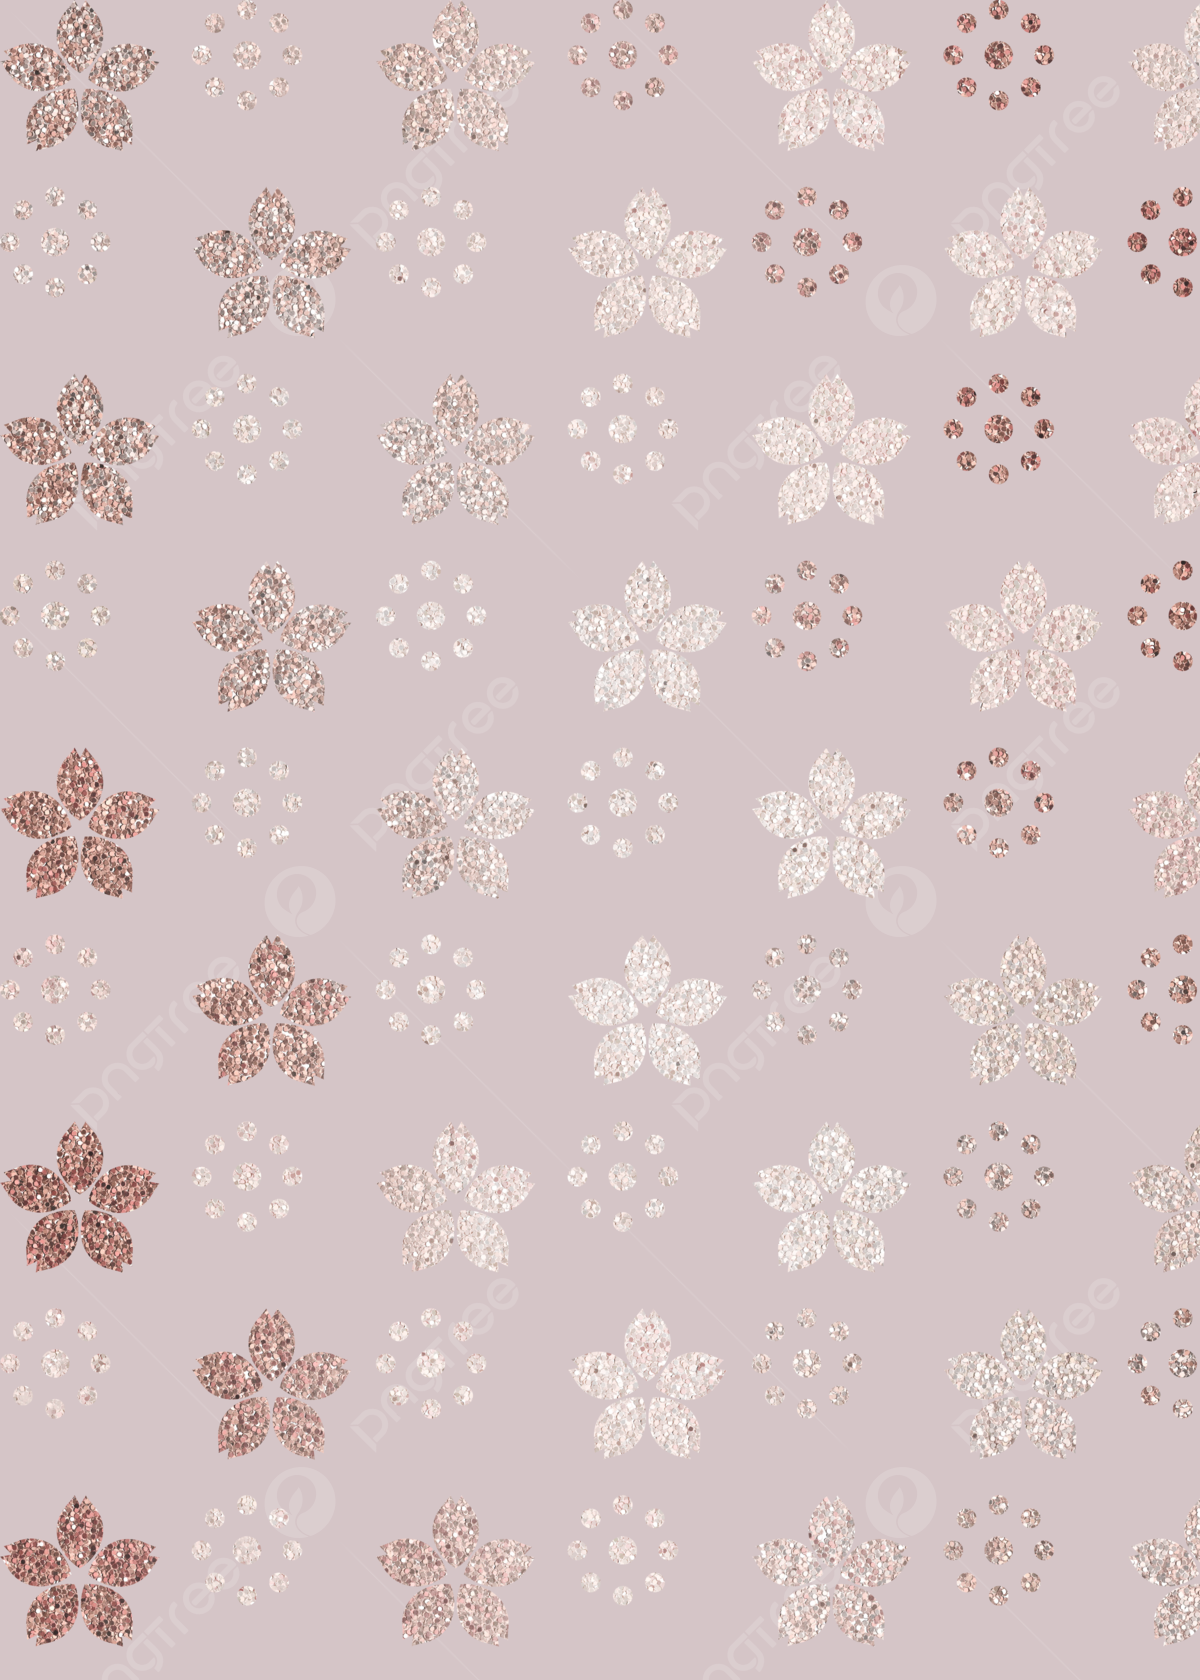  Glitzer Rosegold Hintergrundbild 1200x1680. Rose Gold Glitter Aesthetic Art Background Cherry Blossom Pattern Wallpaper Image For Free Download